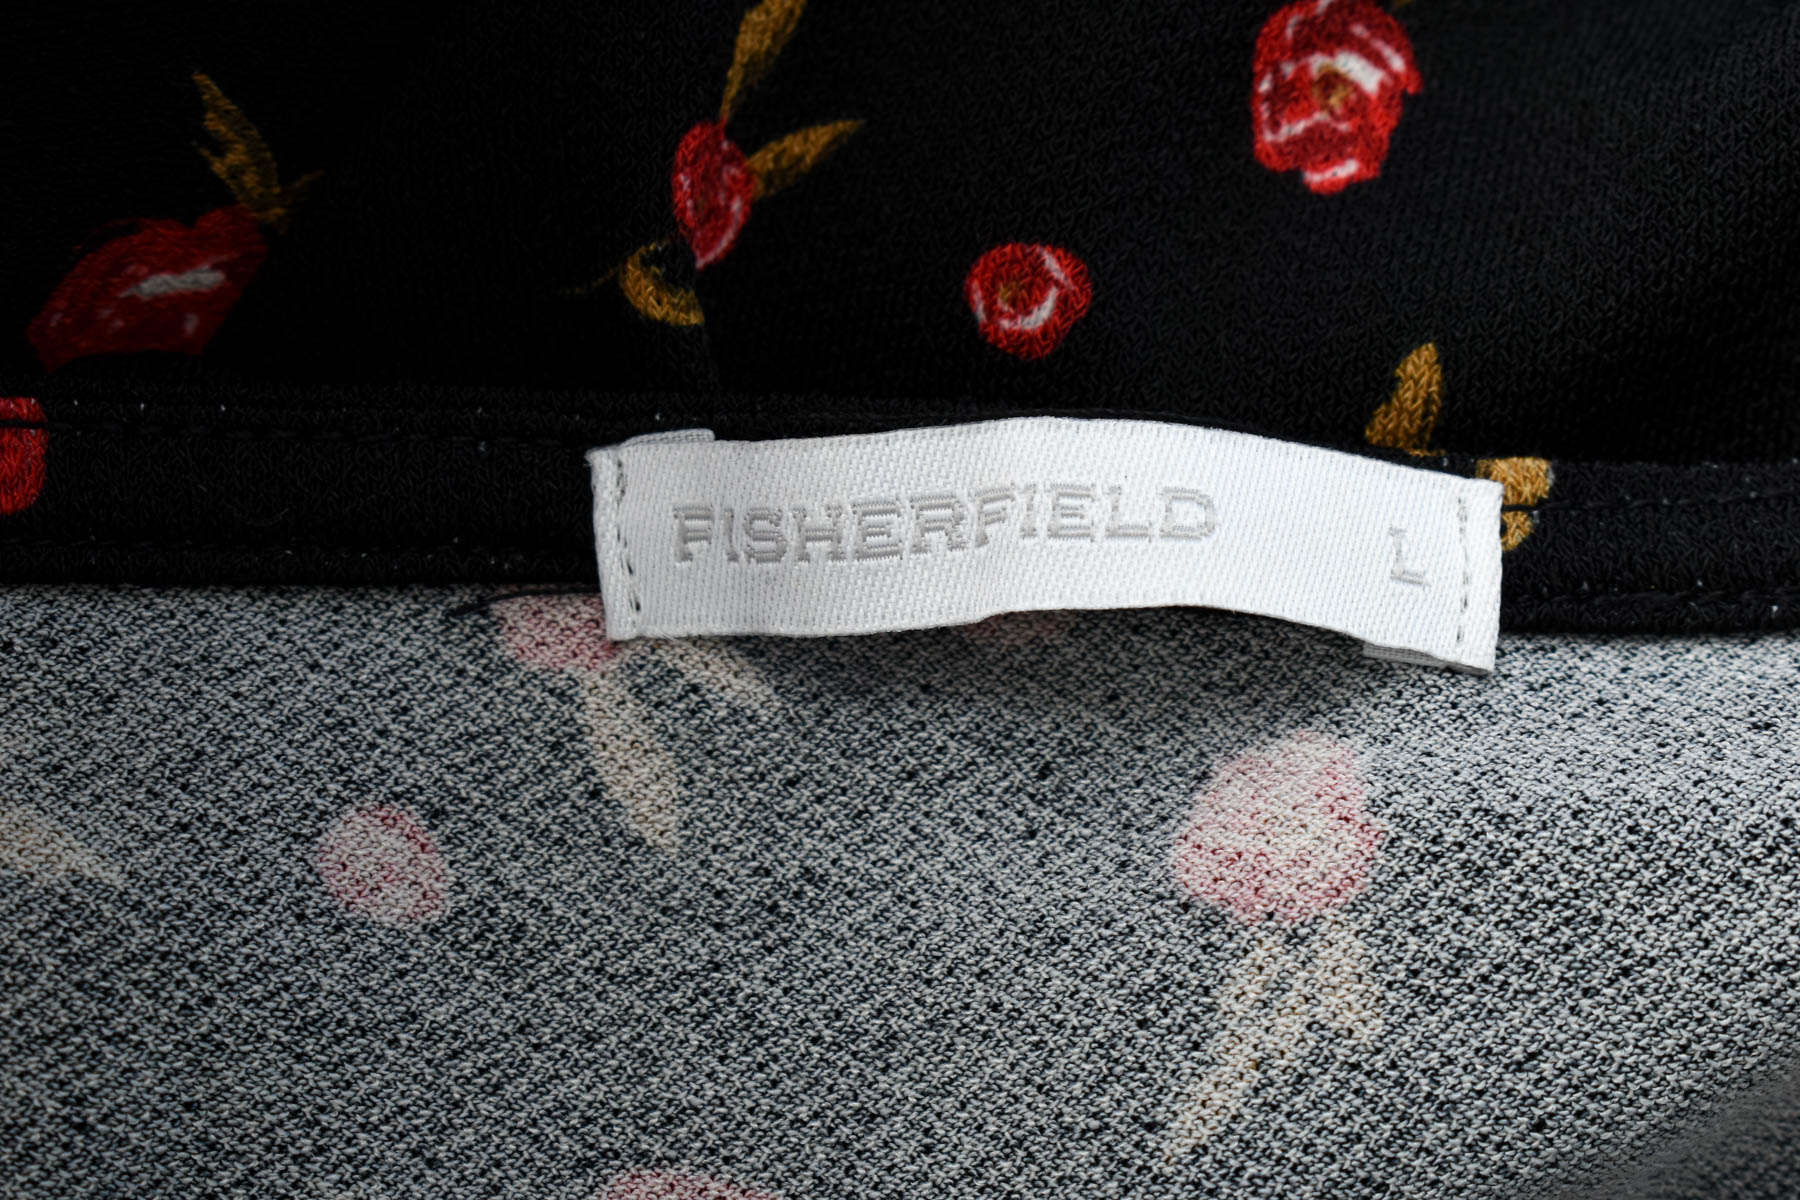 Dress - Fisherfield - 2